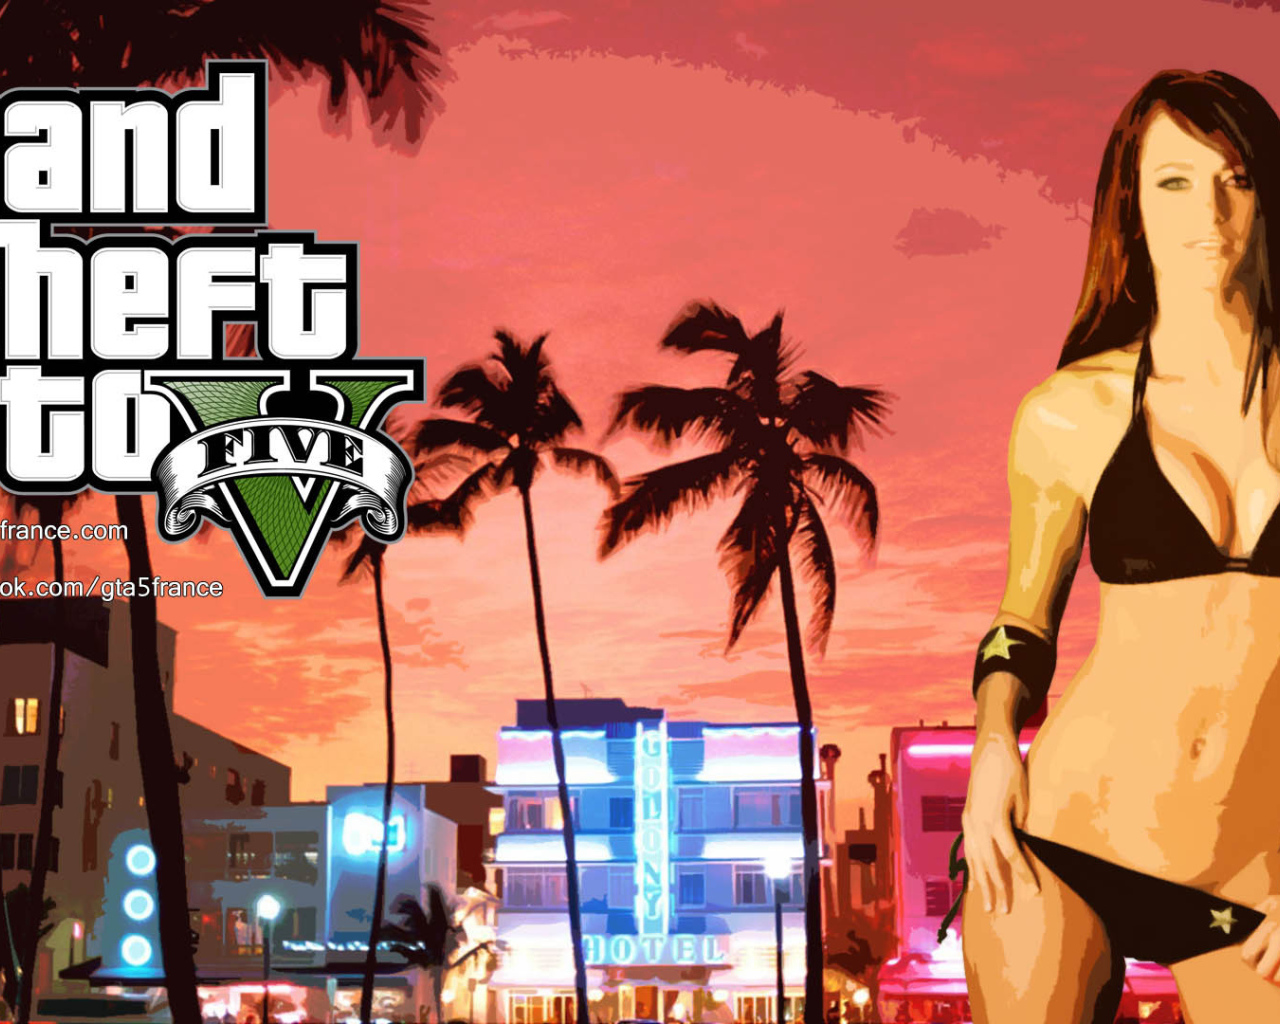 Grand Theft Auto V красотка в черном